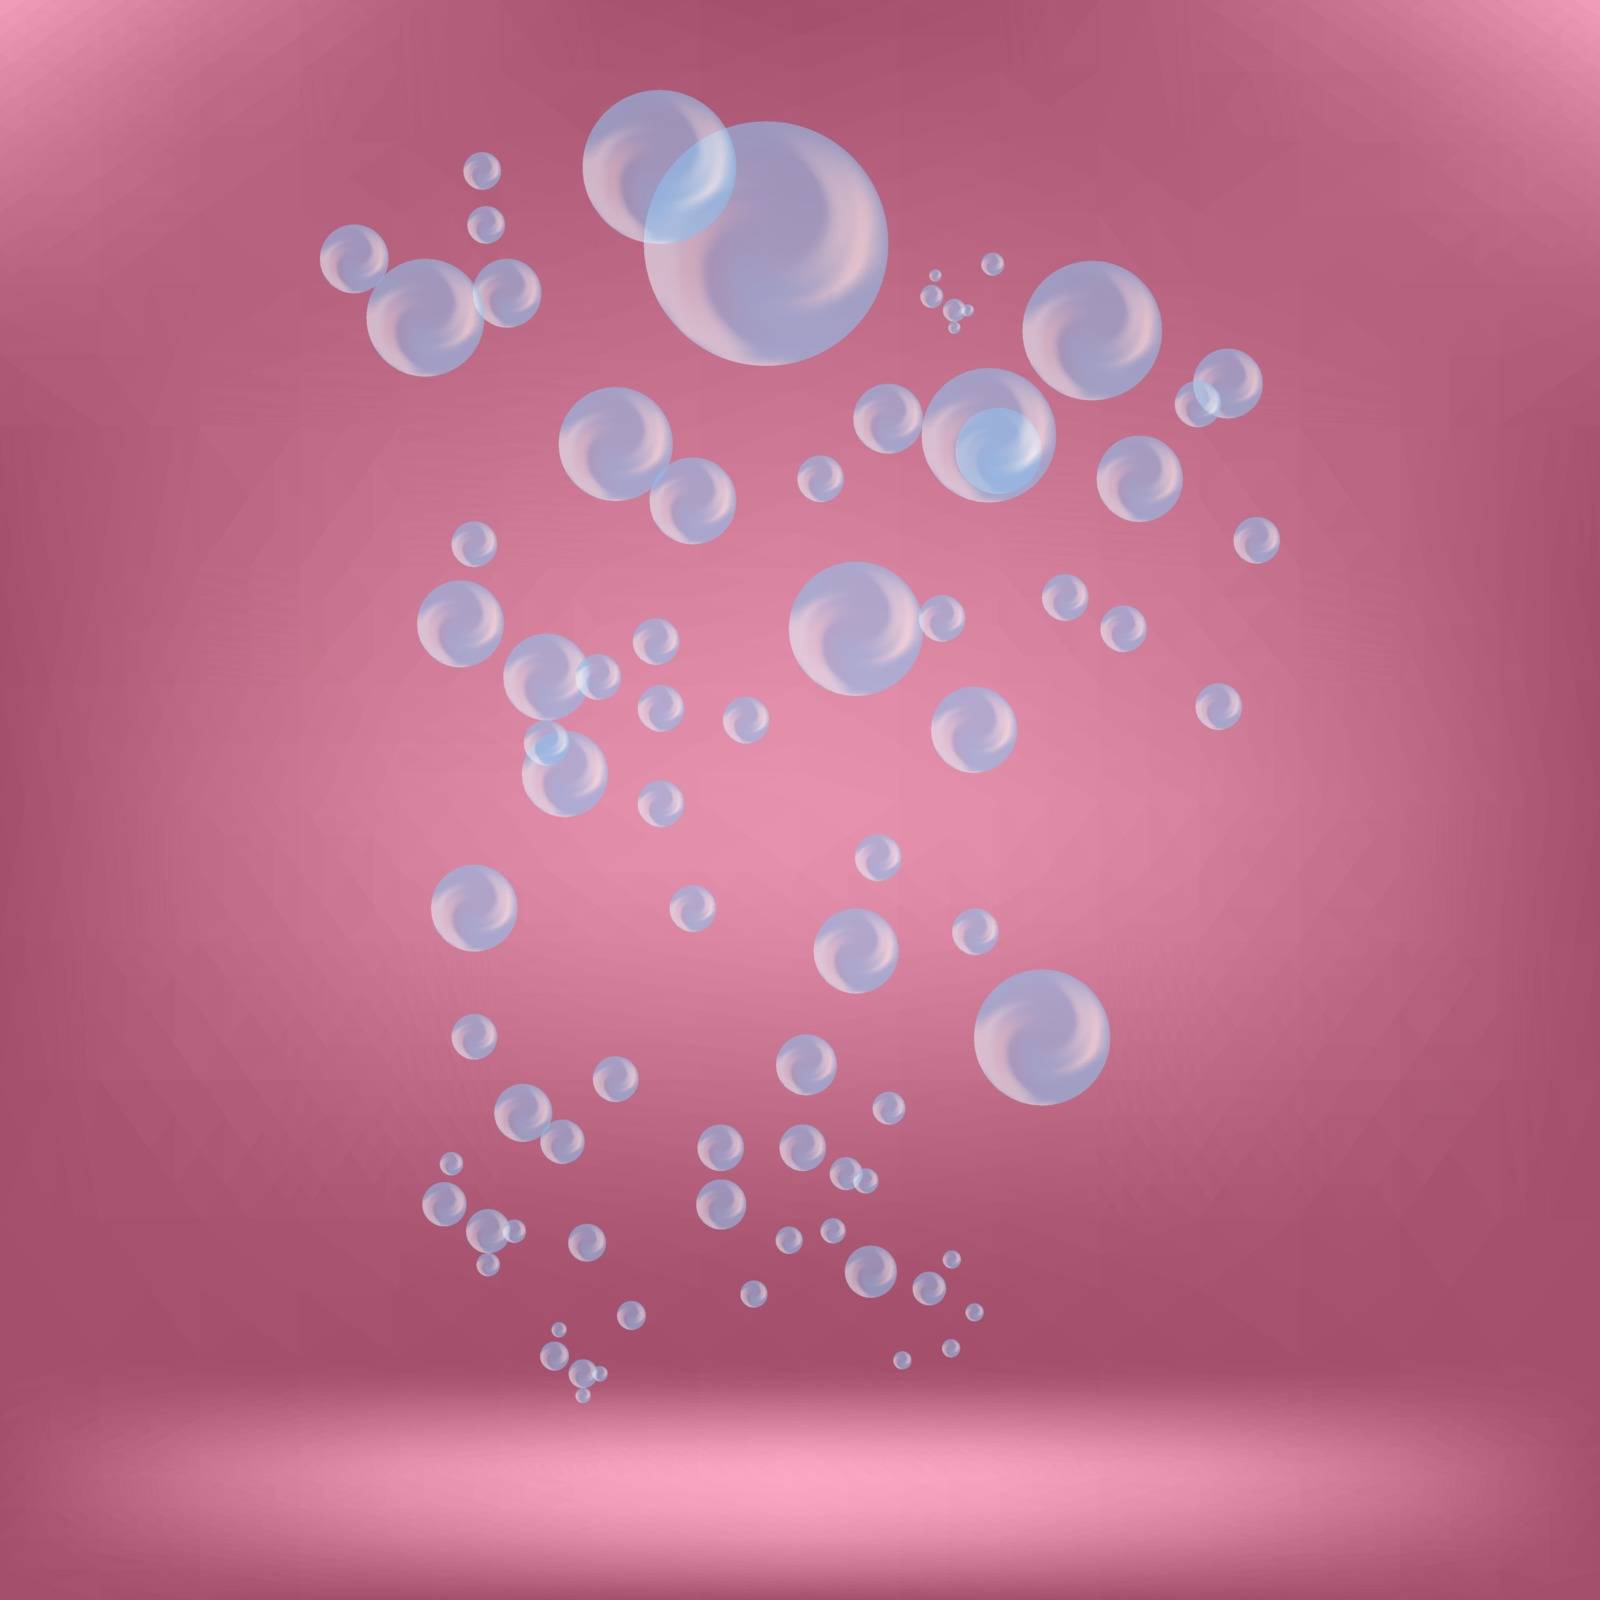 Bubbles by valeo5